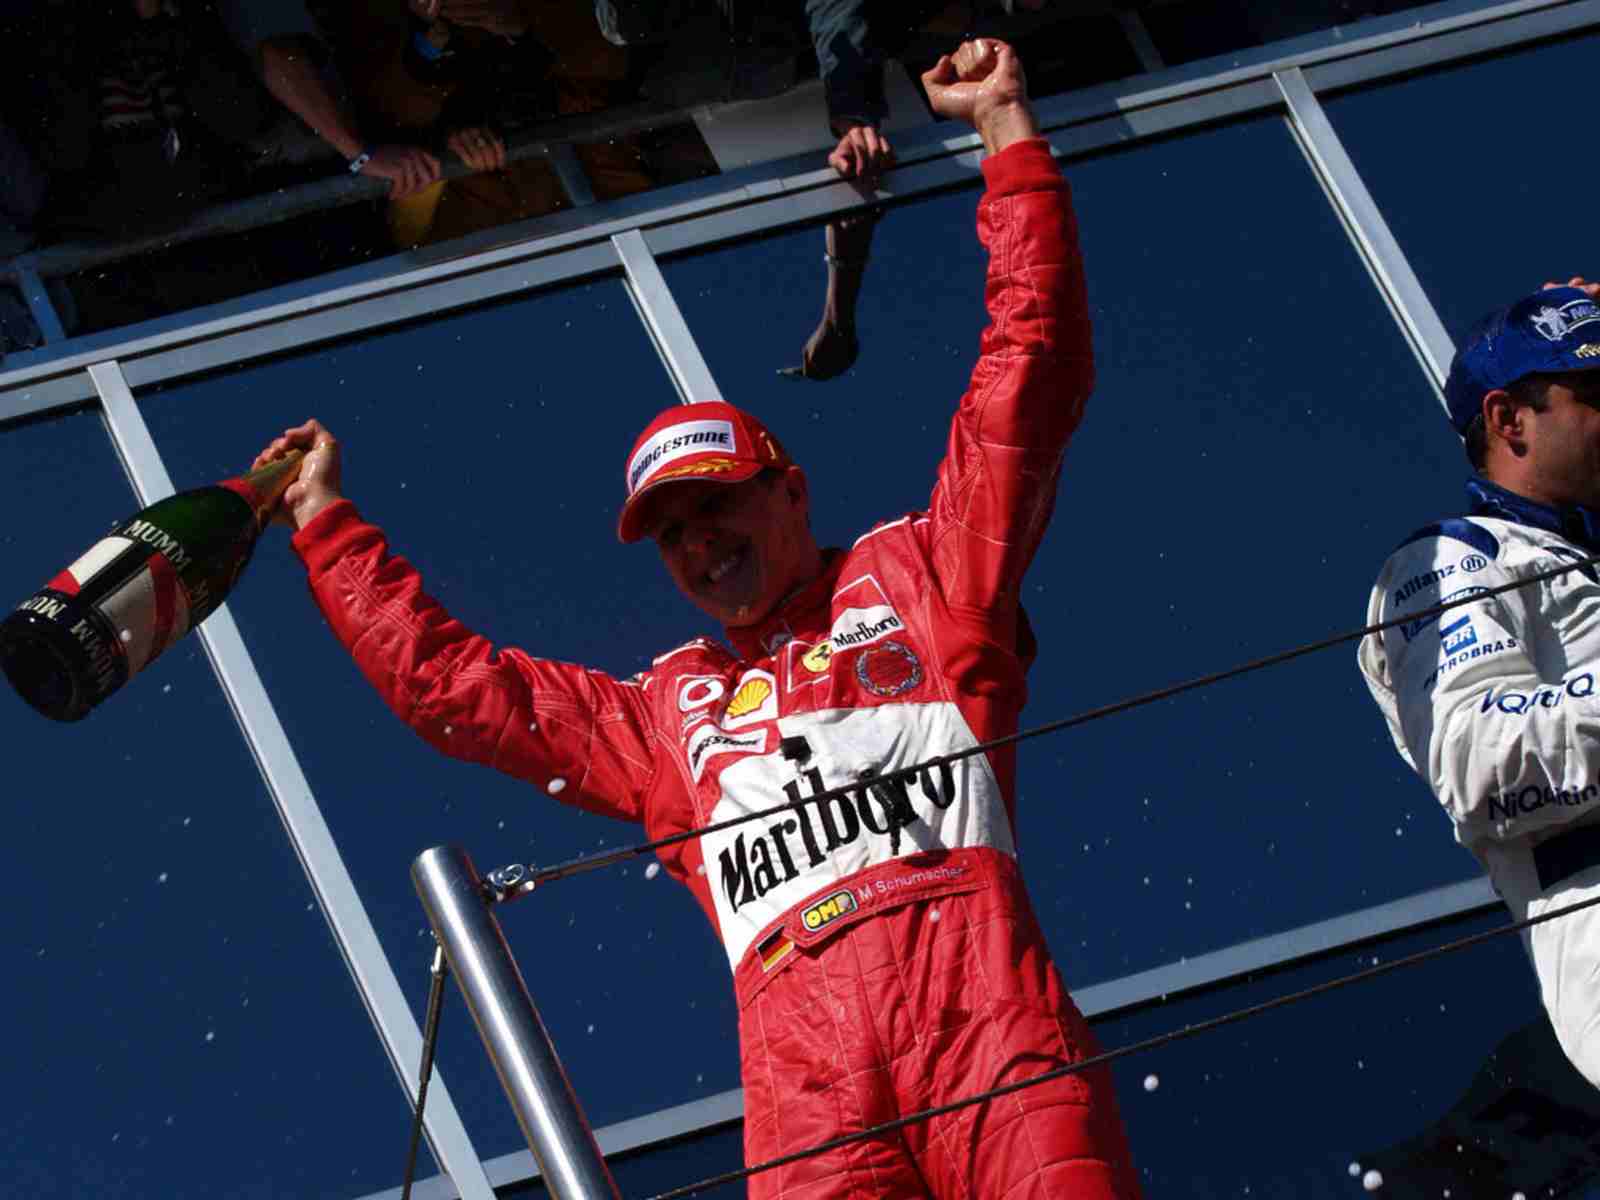 2º lugar: Michael Schumacher (ALE) - 91 vitórias.